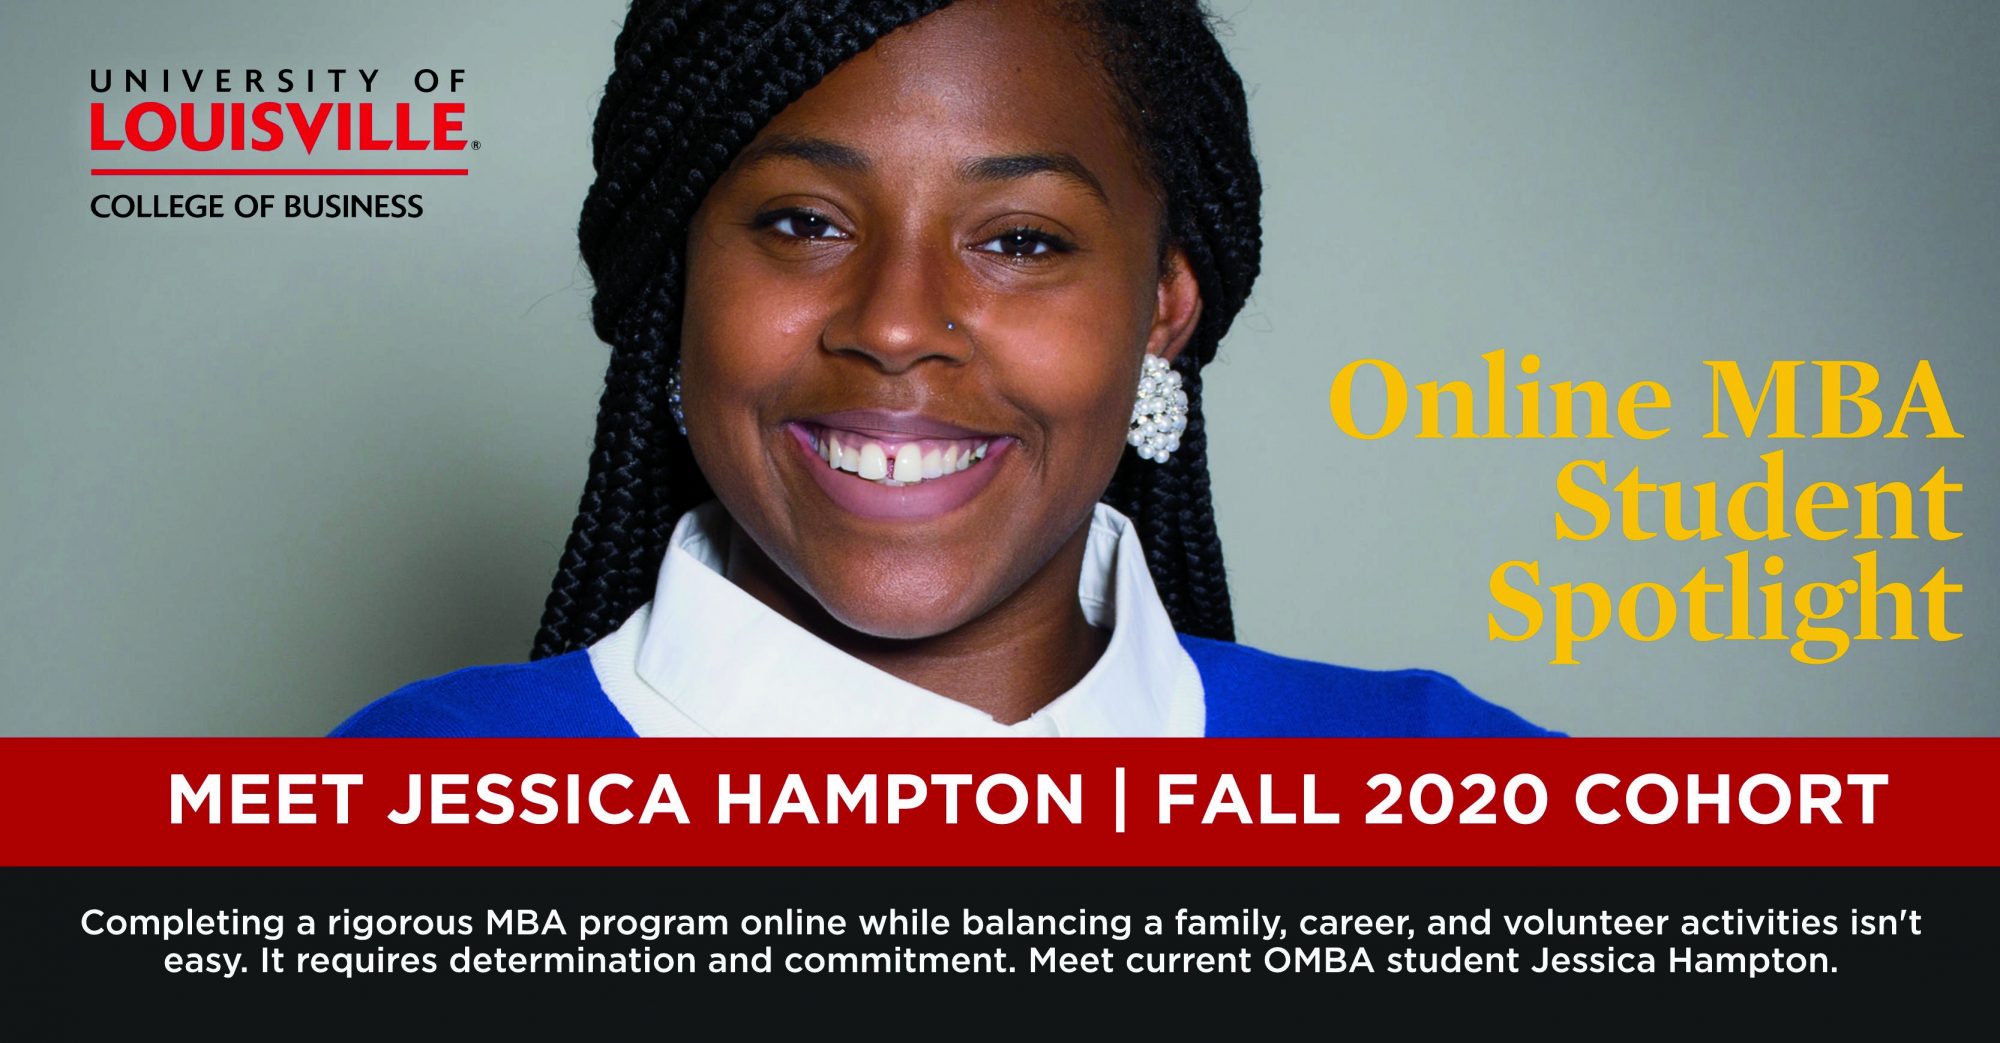 Estudiante destacado de OMBA: Jessica Hampton